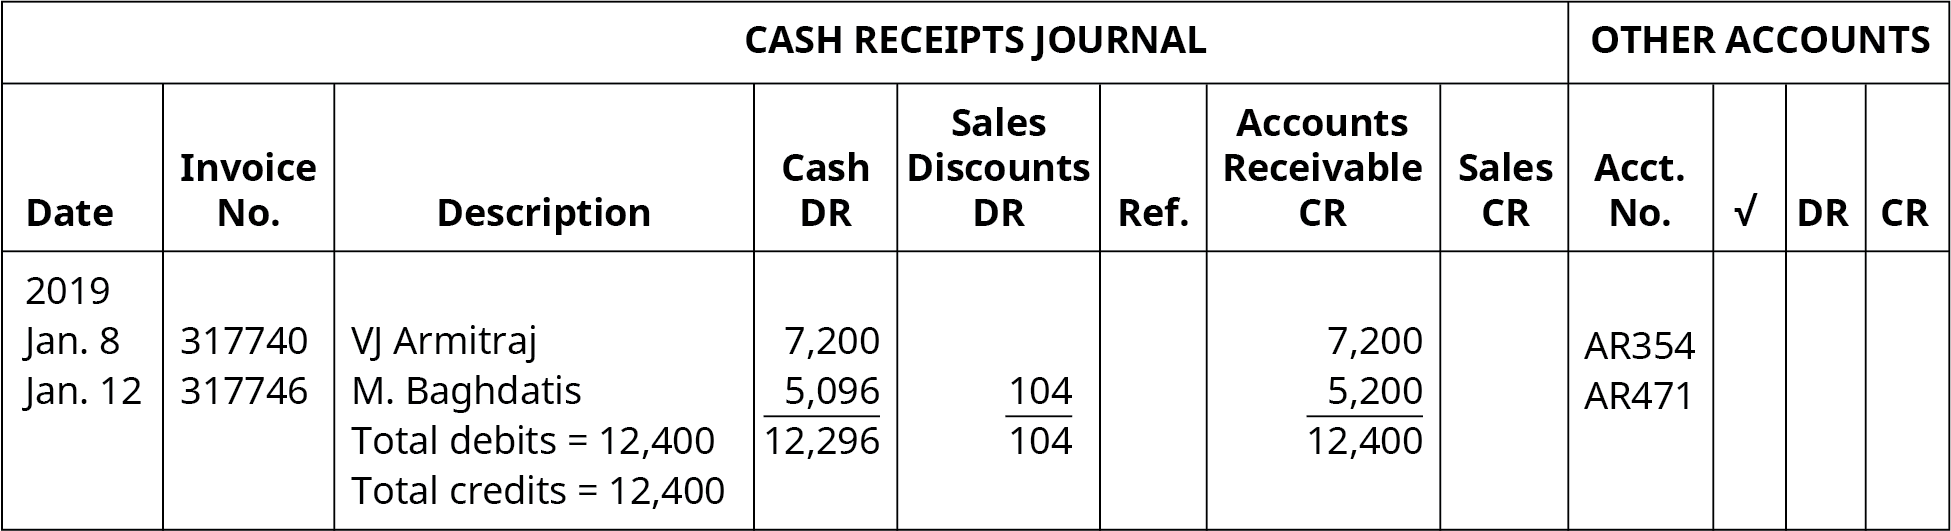 Cash Receipts Journal, Other Accounts. Nine columns, labeled left to right: Date, Invoice Number, Description, Cash DR, Sales Discounts DR, Ref., Accounts Receivable CR, Sales CR, Account Number. Line One: January 8, 2019; 317740; VJ Armitraj; 7,200; Blank; Blank; 7,200; Blank; AR354. Line Two: January 12, 2019; 317746; M. Baghdatis; 5,096; 104; Blank; 5,200; Blank; AR471. Line Three: Blank, Blank, Total debits = 12,400; 12,296; 104; Blank; 12,400; Blank; Blank. Line Four: Blank; Blank; Total credits = 12,400; Blank; Blank; Blank; Blank; Blank; Blank.